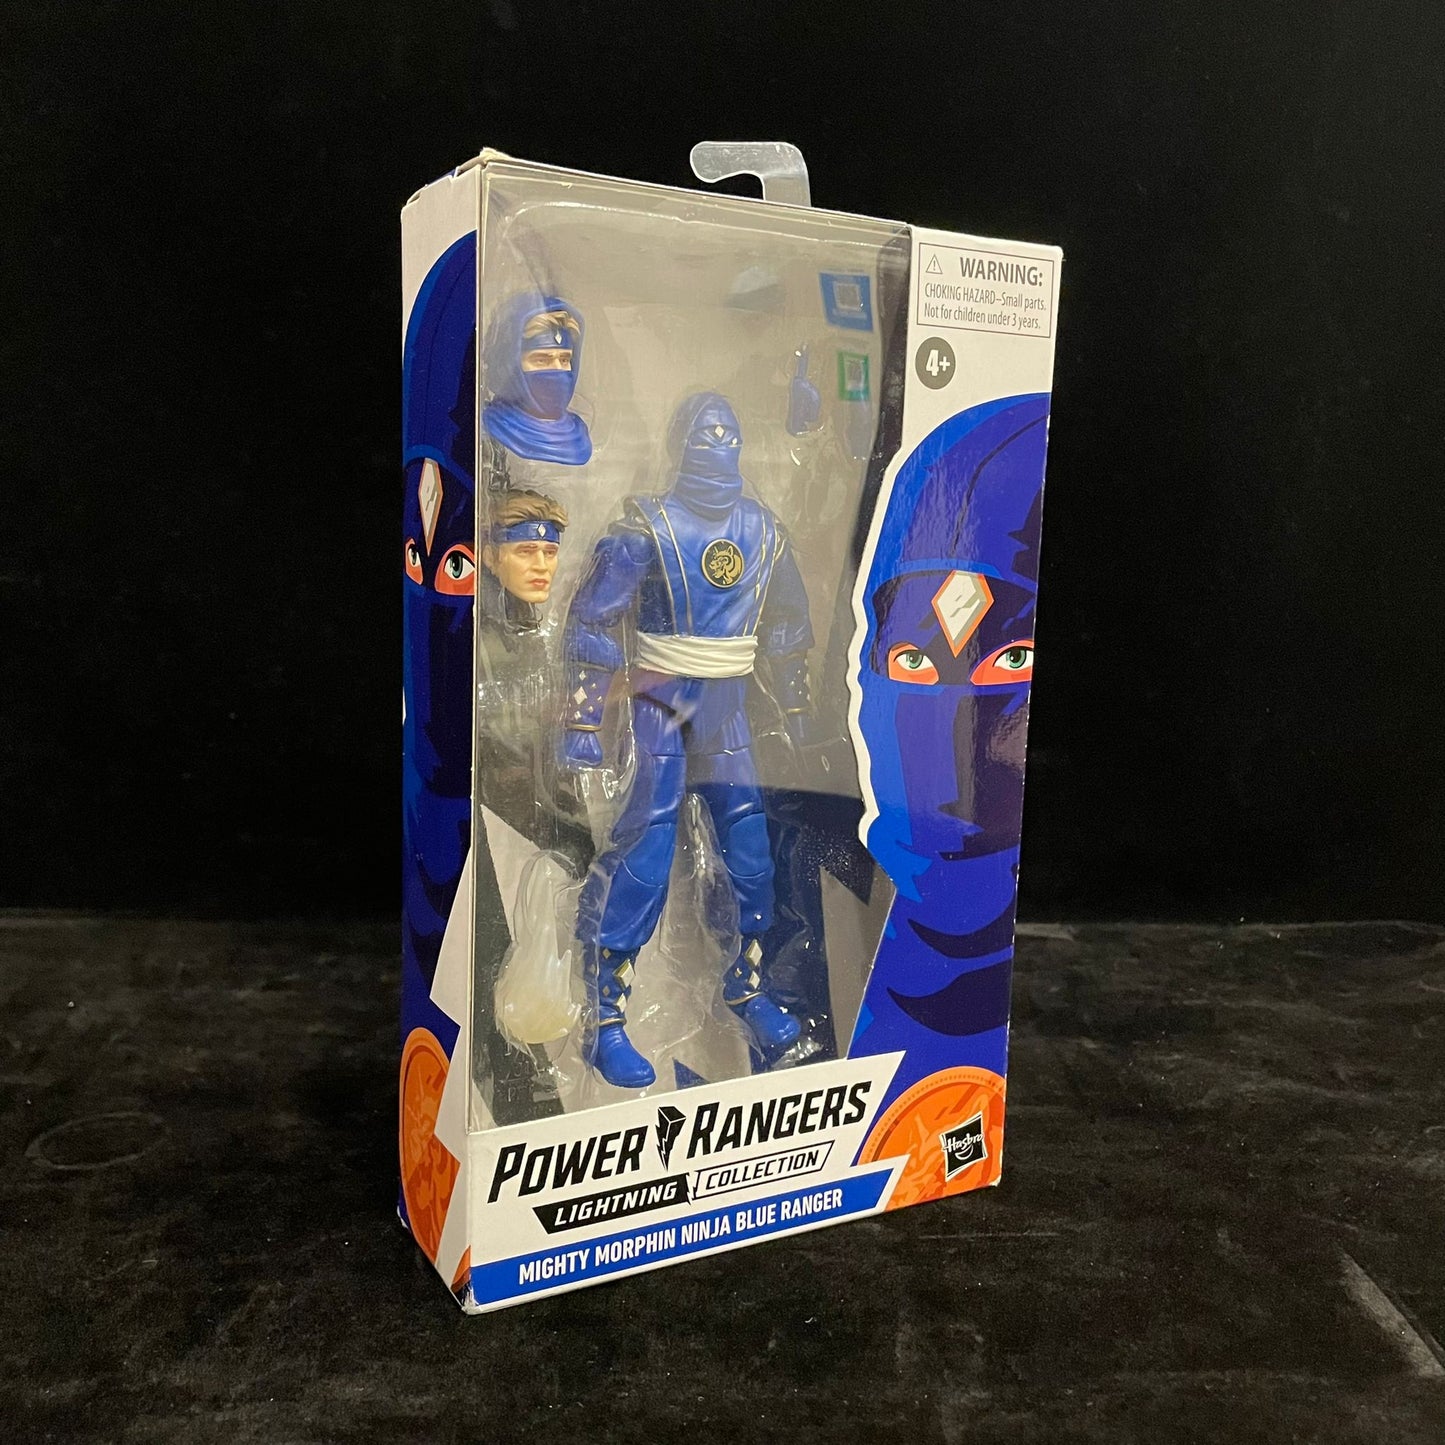 Power Rangers Lightning Collection Mighty Morphin Ninja Blue Ranger Figure